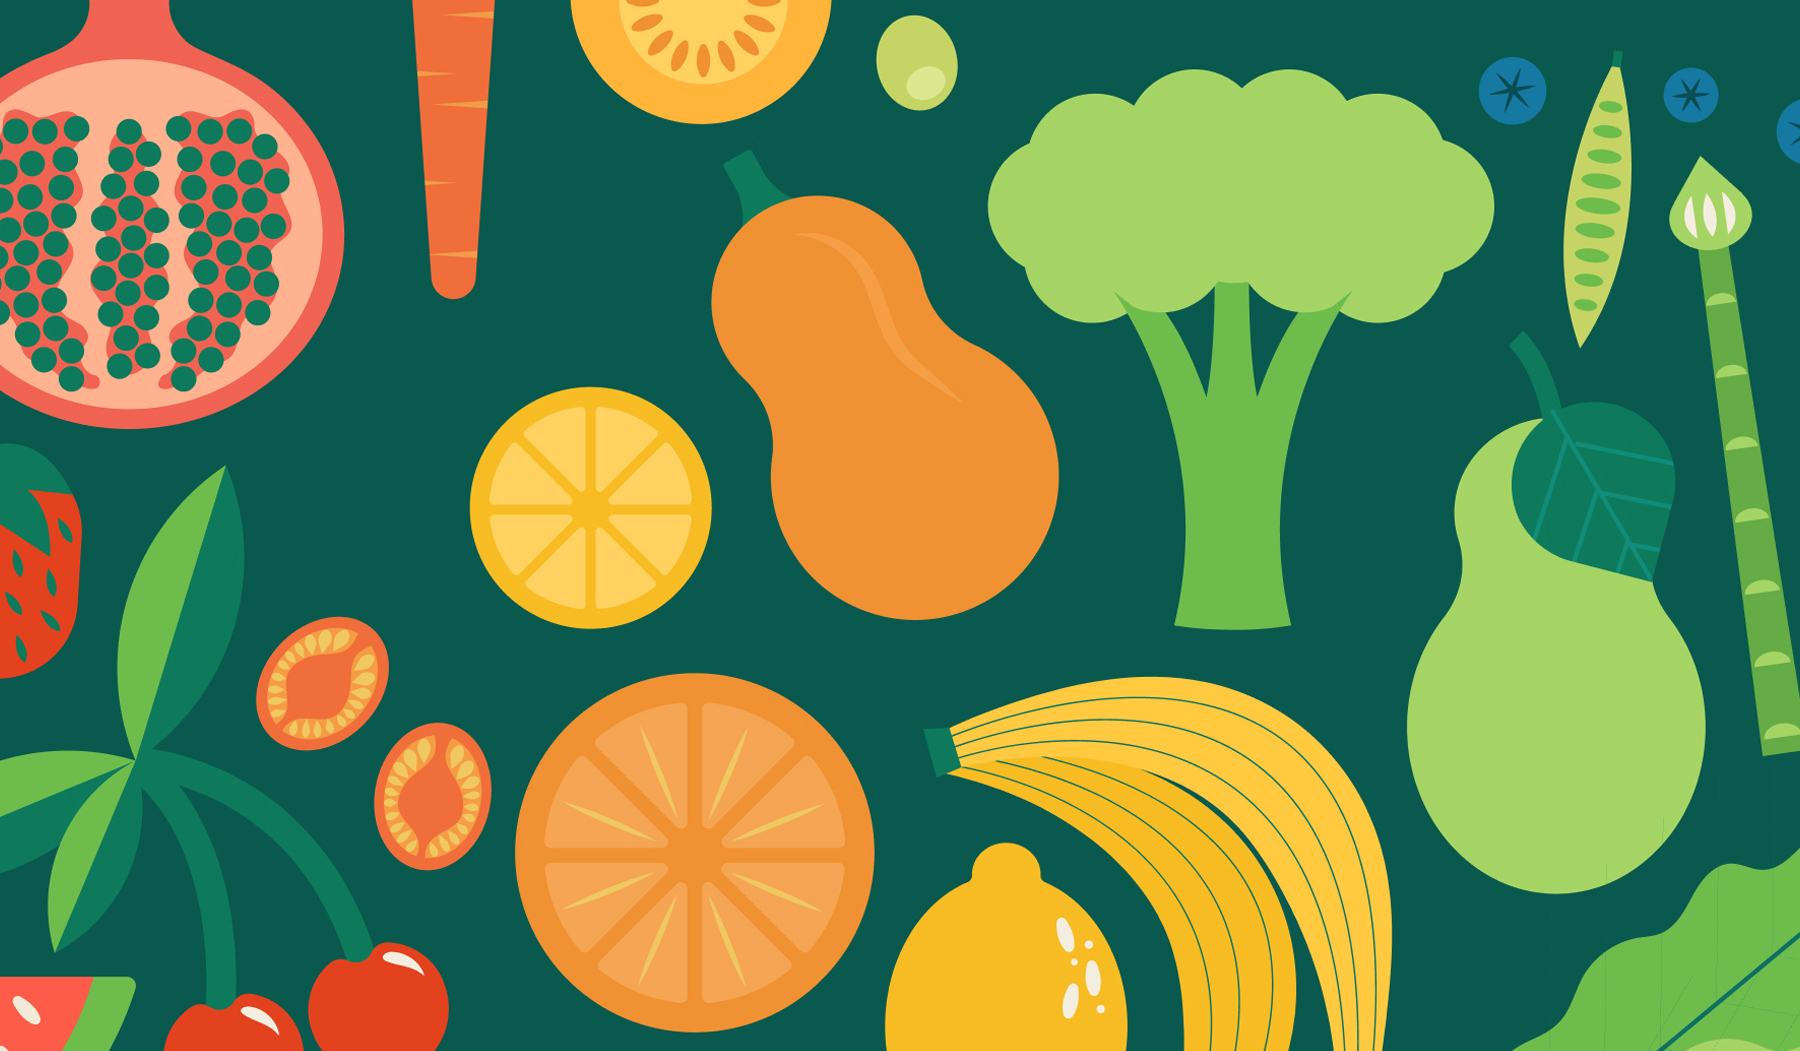 Illustration of fruits and vegetables.